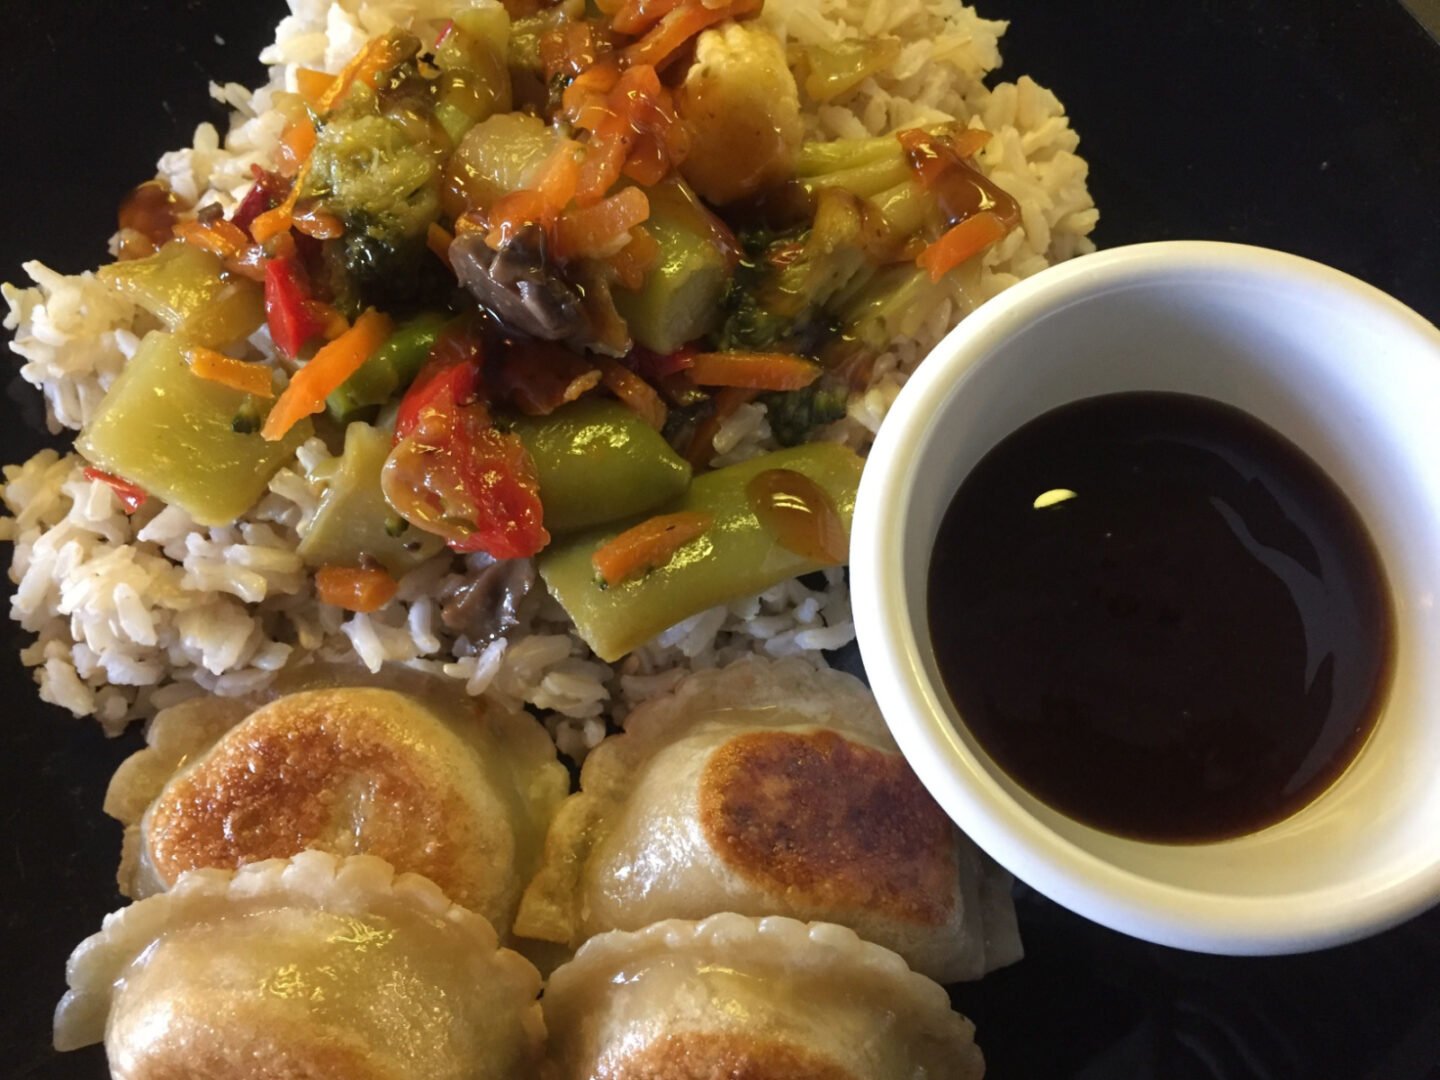 stirfried veggies on rice with dumplings